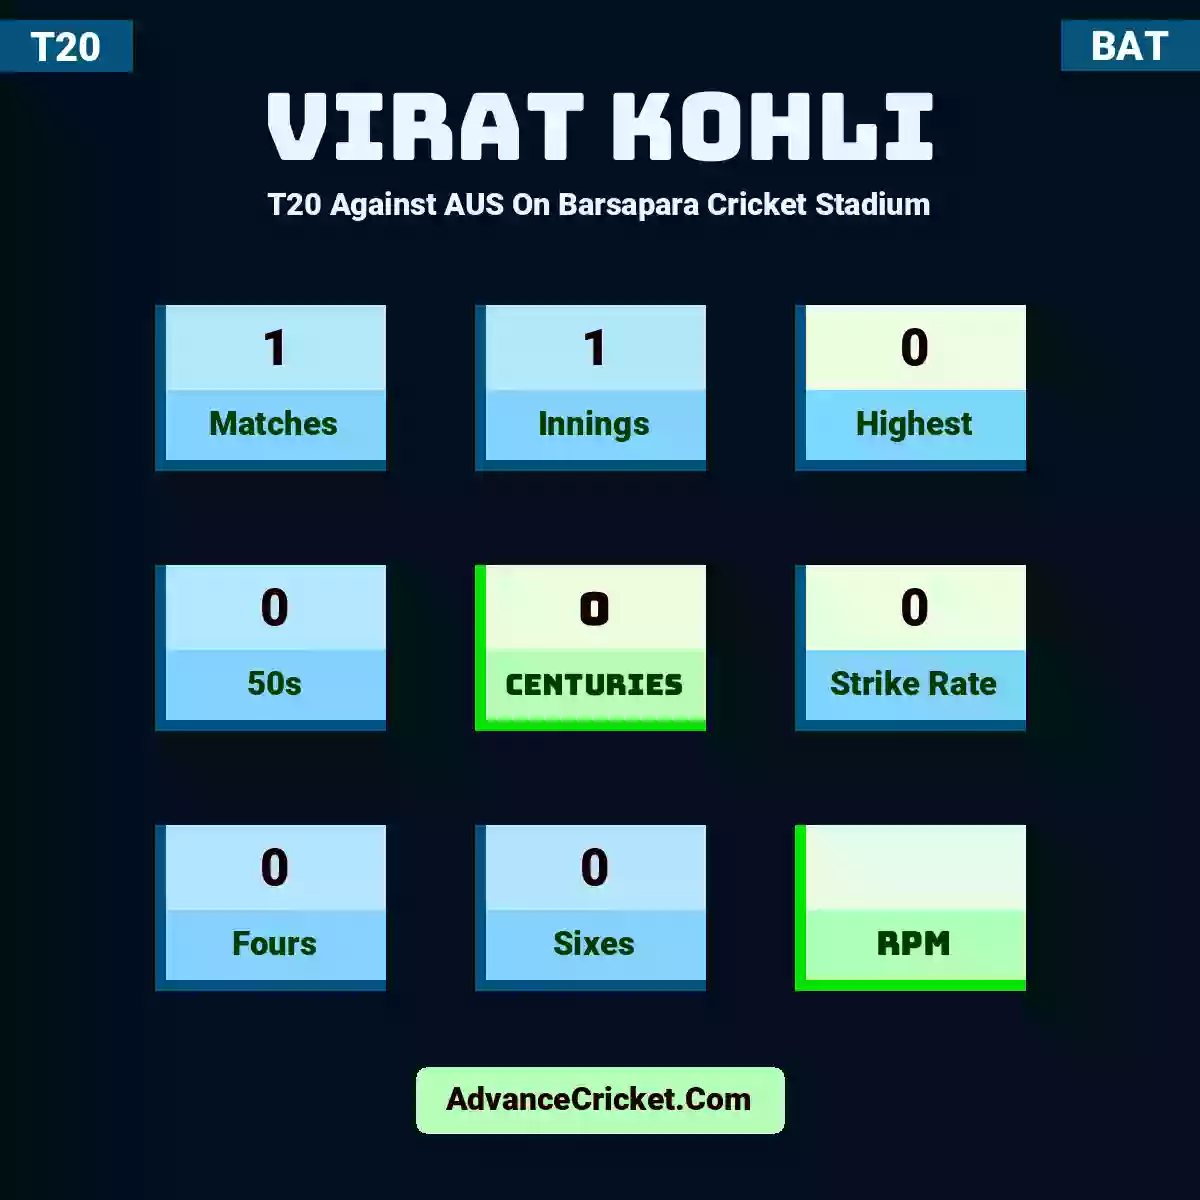 Virat Kohli T20  Against AUS On Barsapara Cricket Stadium, Virat Kohli played 1 matches, scored 0 runs as highest, 0 half-centuries, and 0 centuries, with a strike rate of 0. V.Kohli hit 0 fours and 0 sixes.